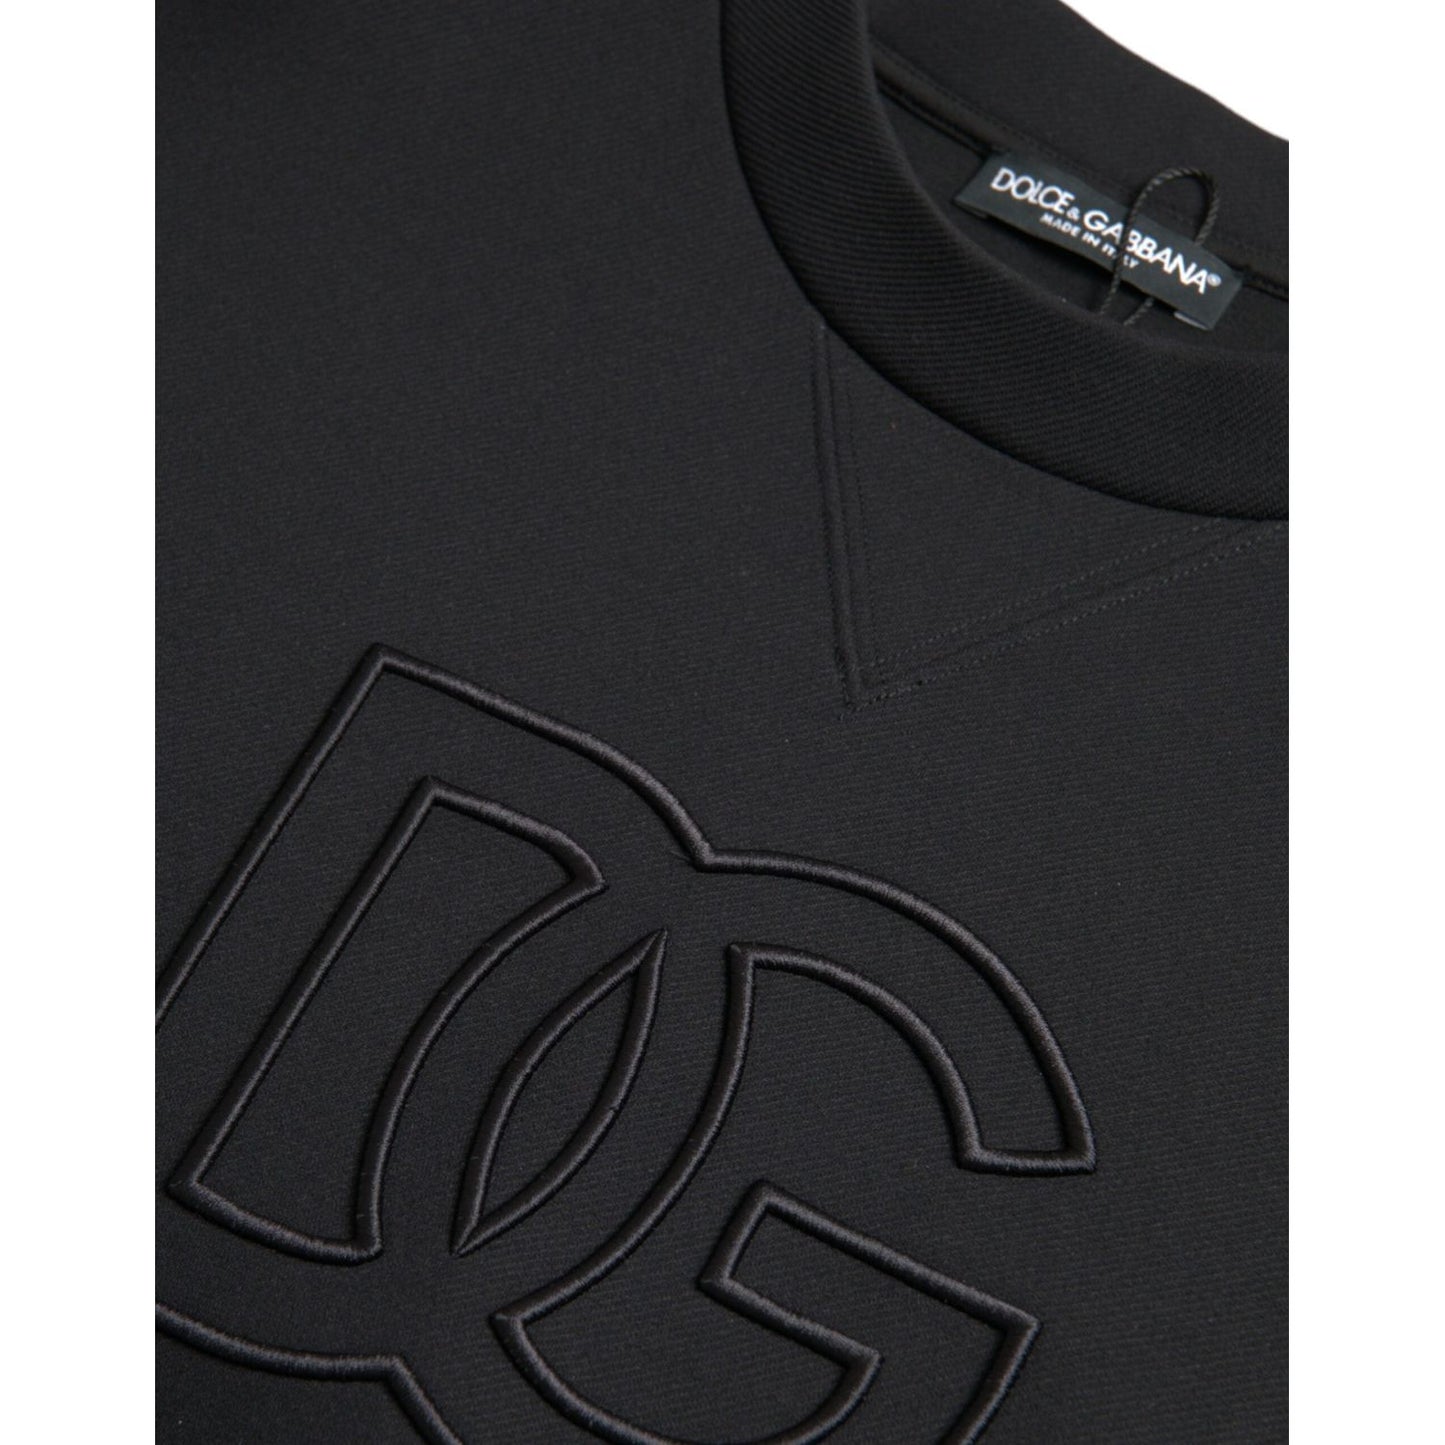 Dolce & Gabbana Black DG Logo Pullover Sweatshirt Sweater black-dg-logo-pullover-sweatshirt-sweater-1